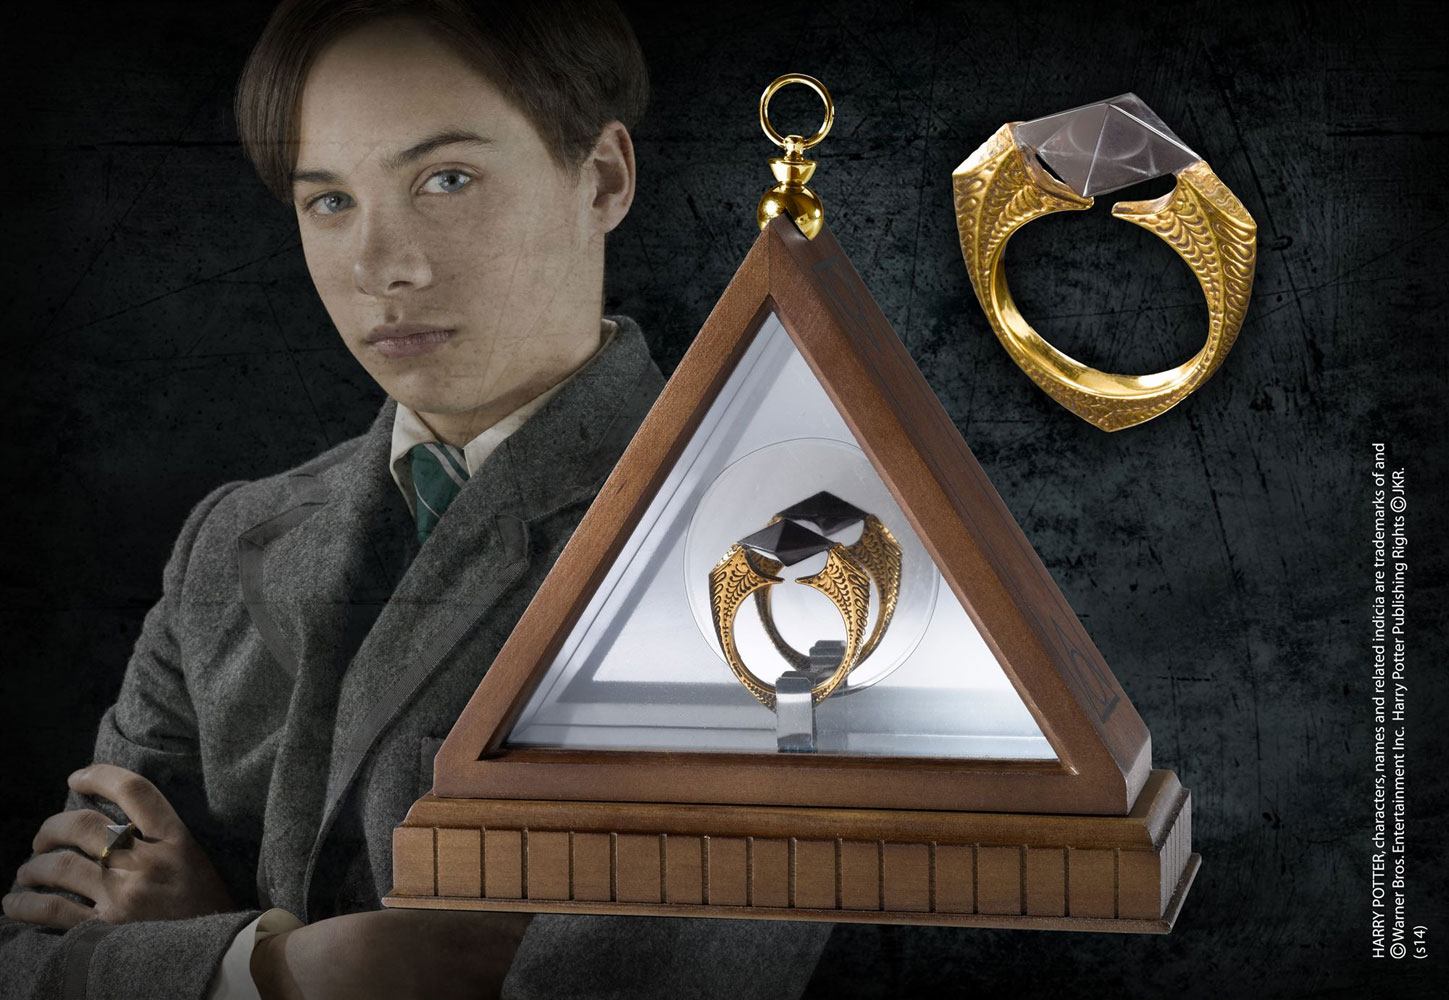 Harry Potter Replik 1/1 Lord Voldemorts Horkrux Ring (vergoldet)